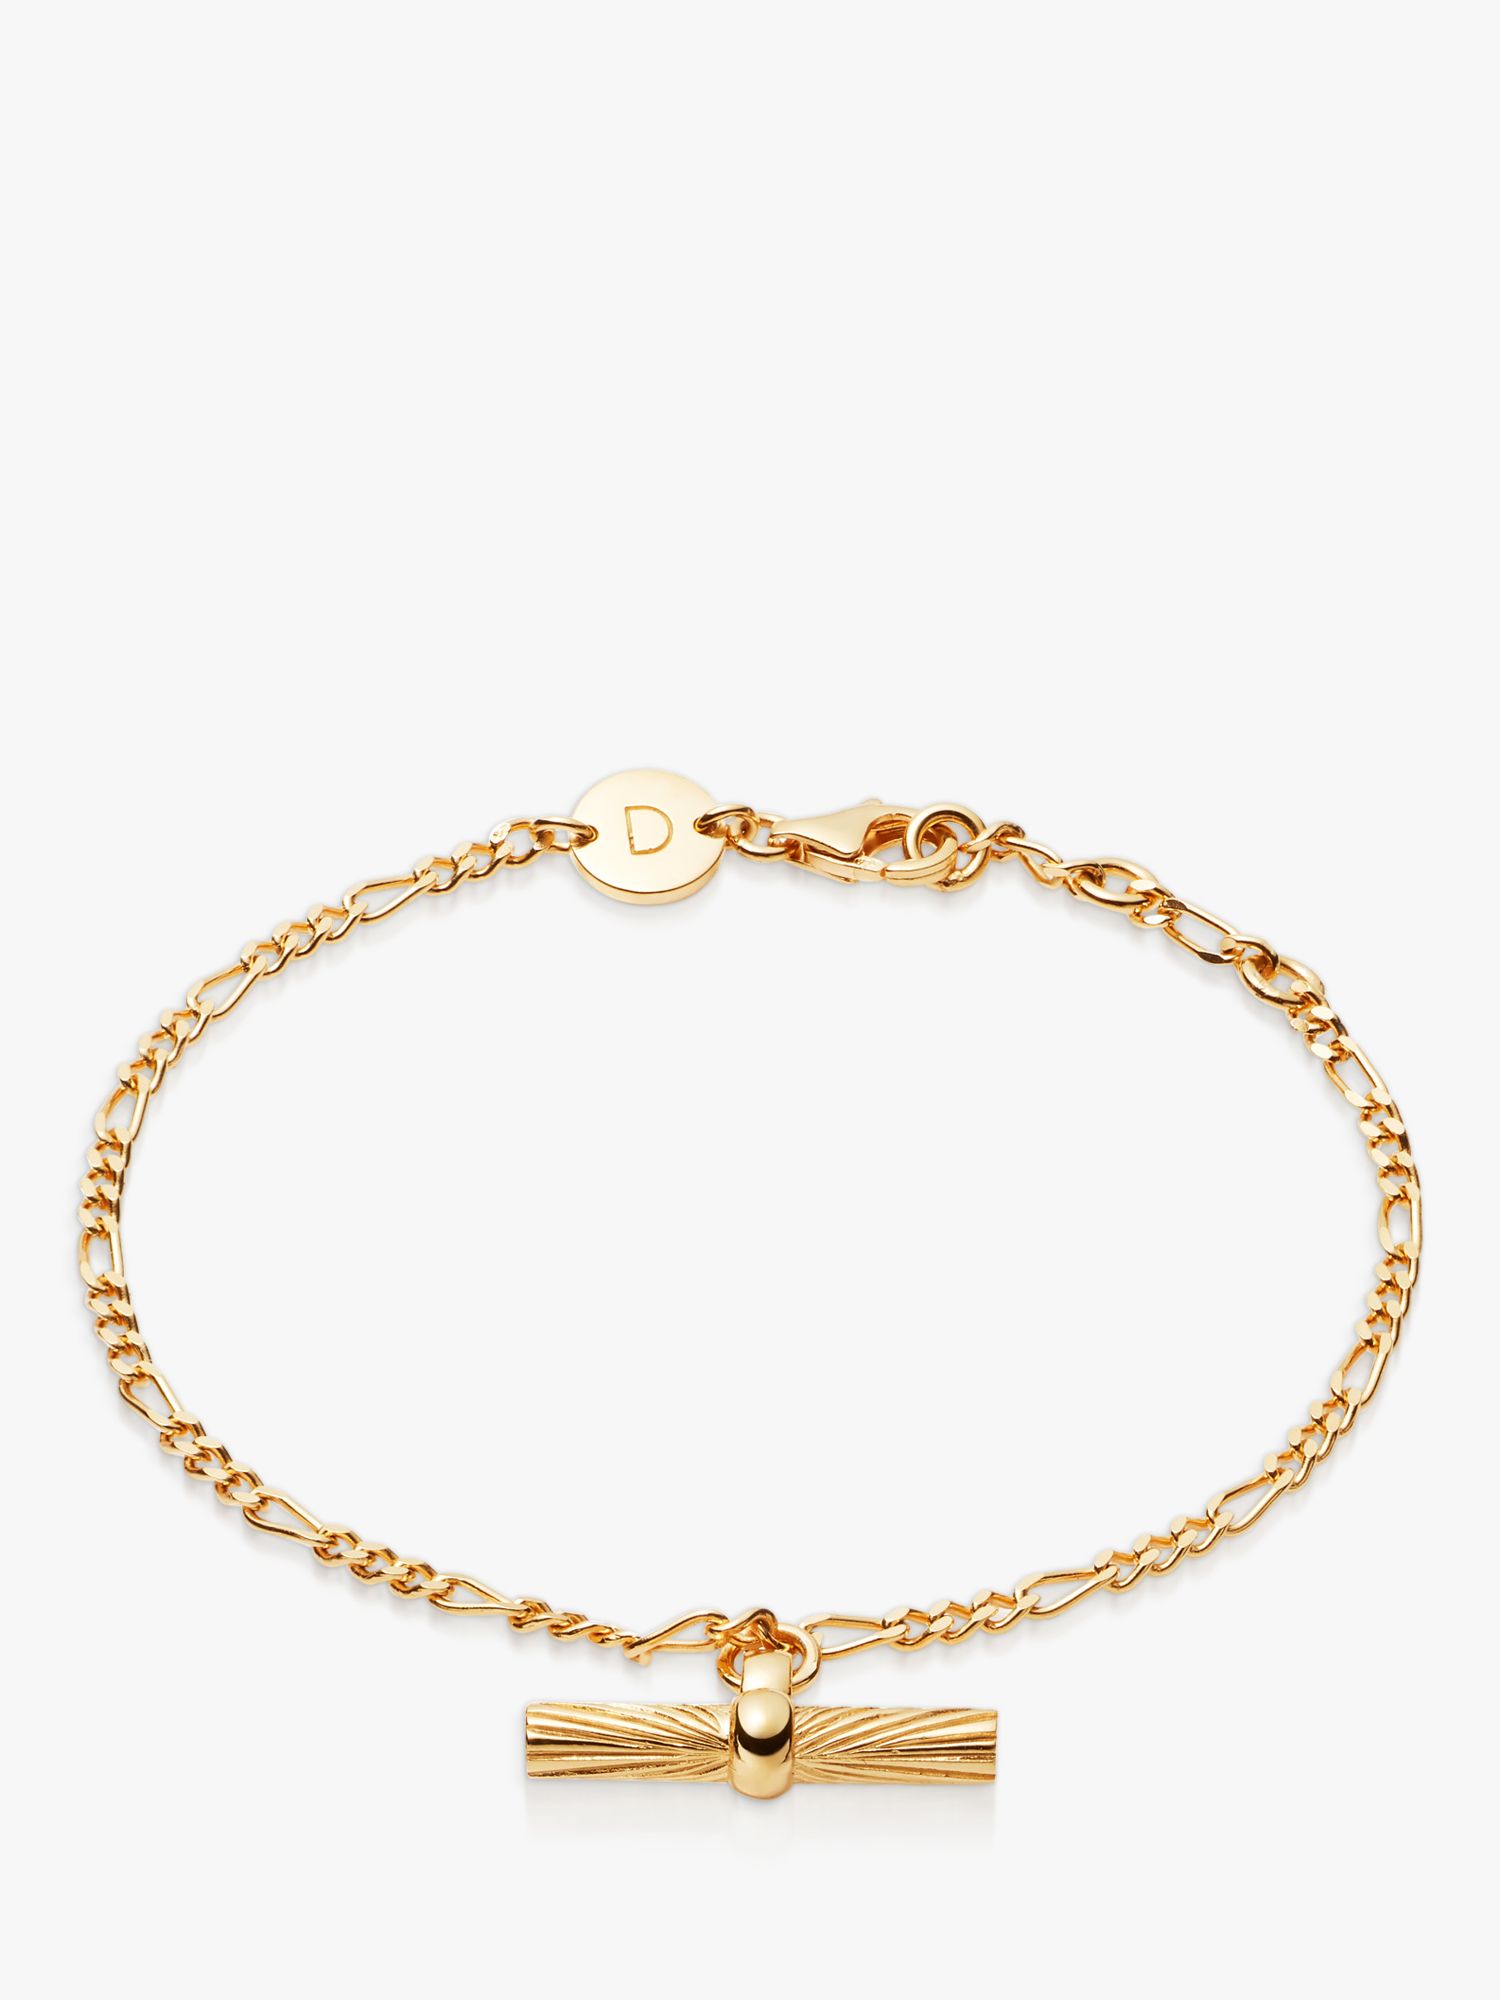 Daisy London T-Bar Charm Chain Bracelet, Gold at John Lewis & Partners